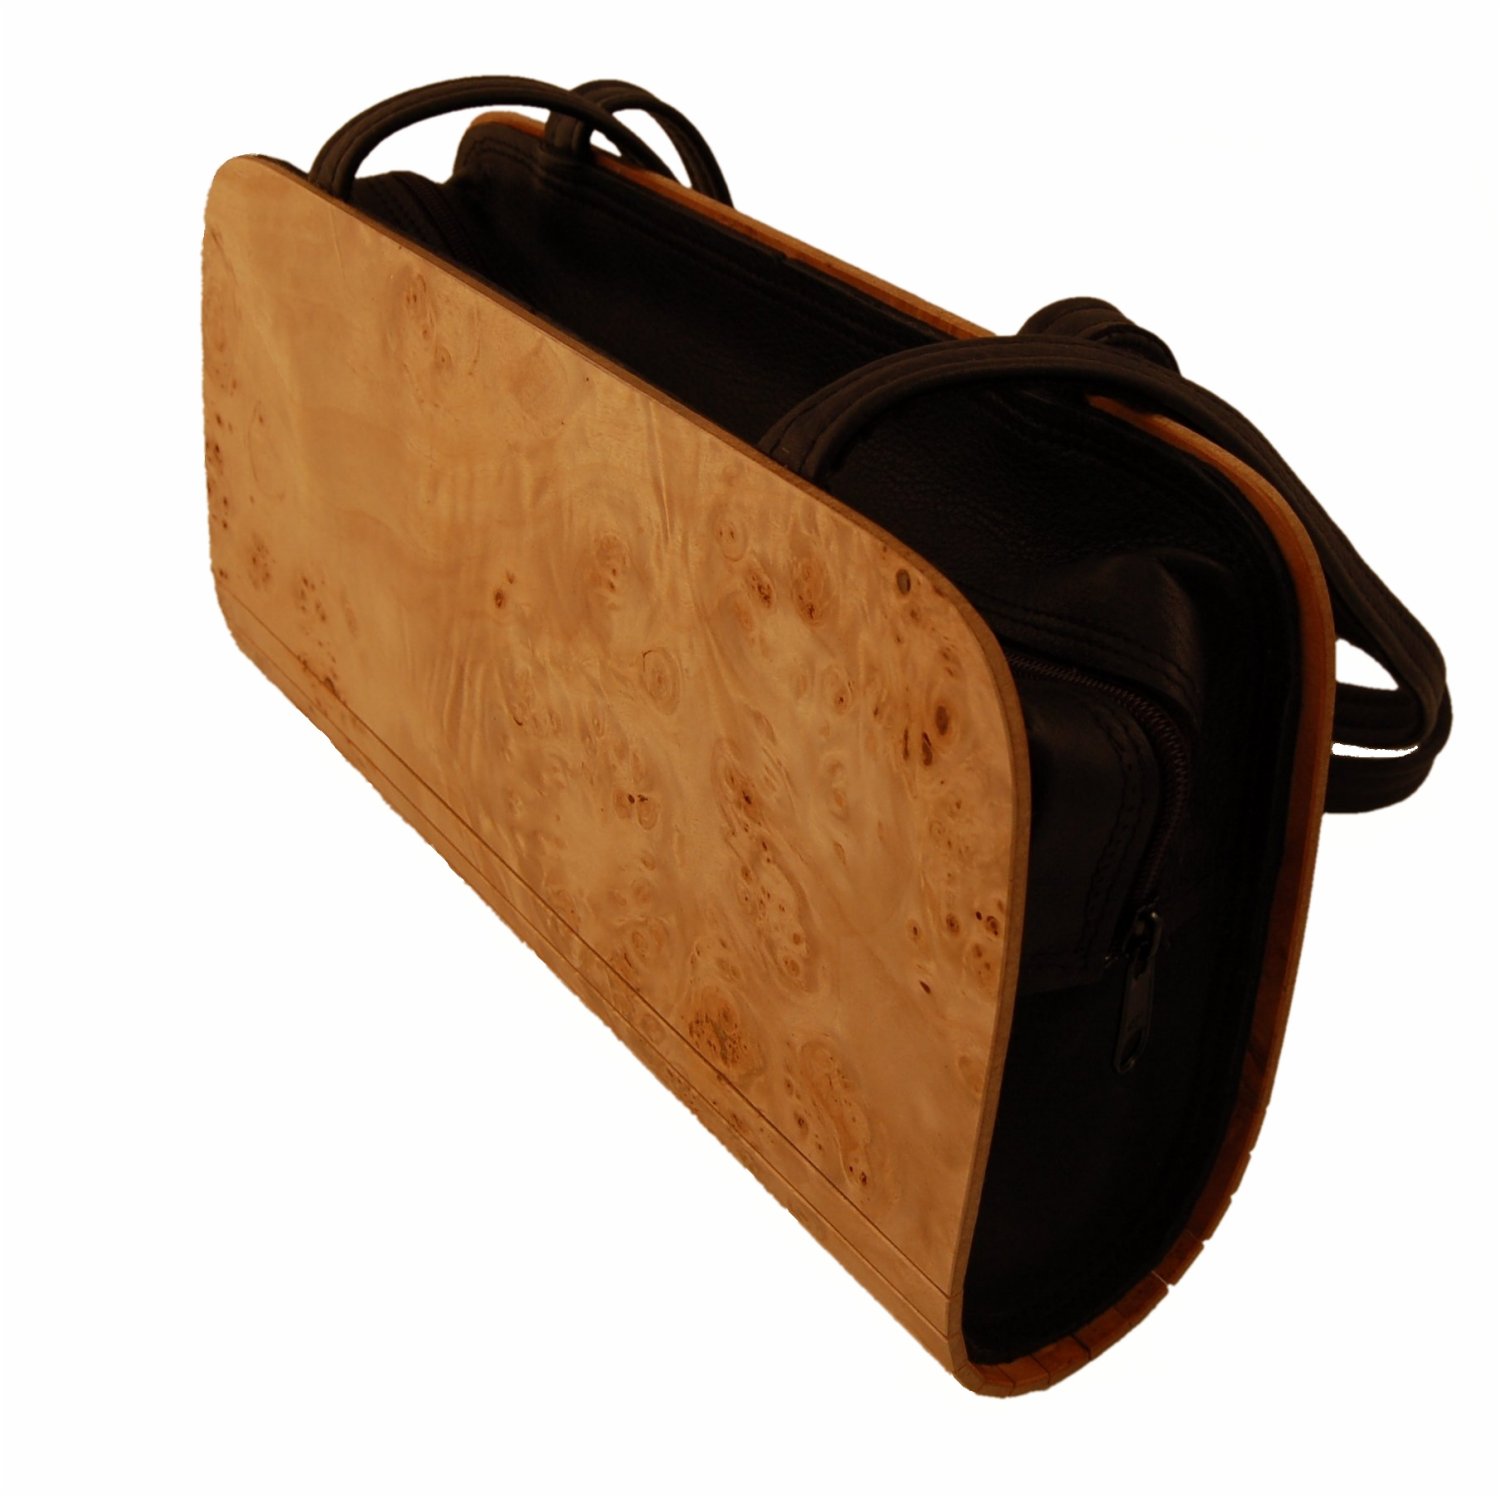 High quality wooden handbag made of poplar wood